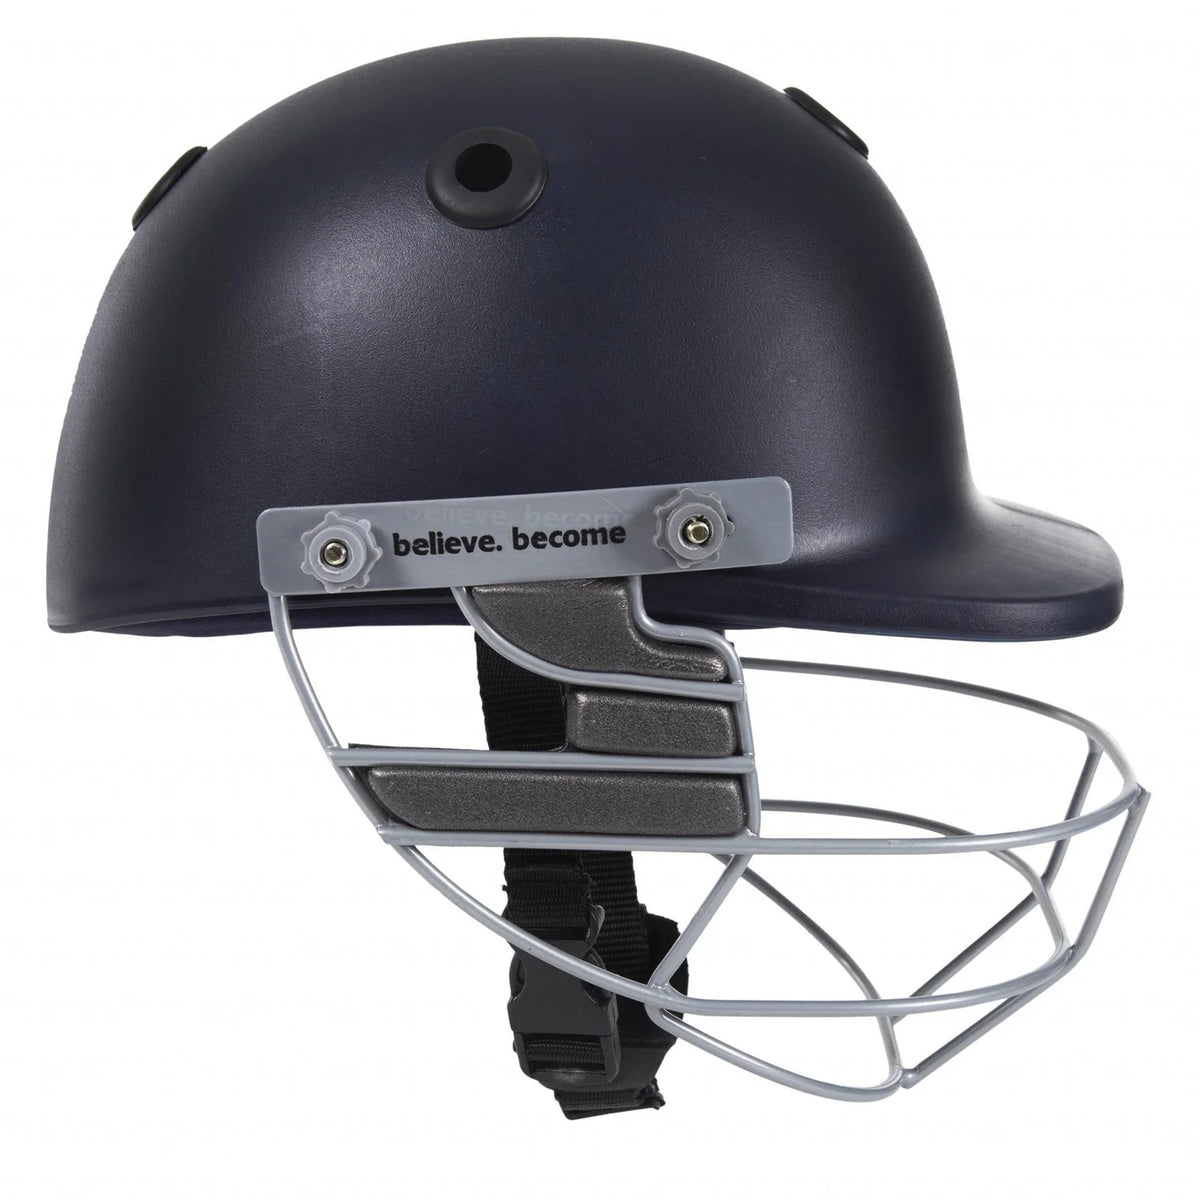 Pre-Order SG Optipro Cricket Helmet